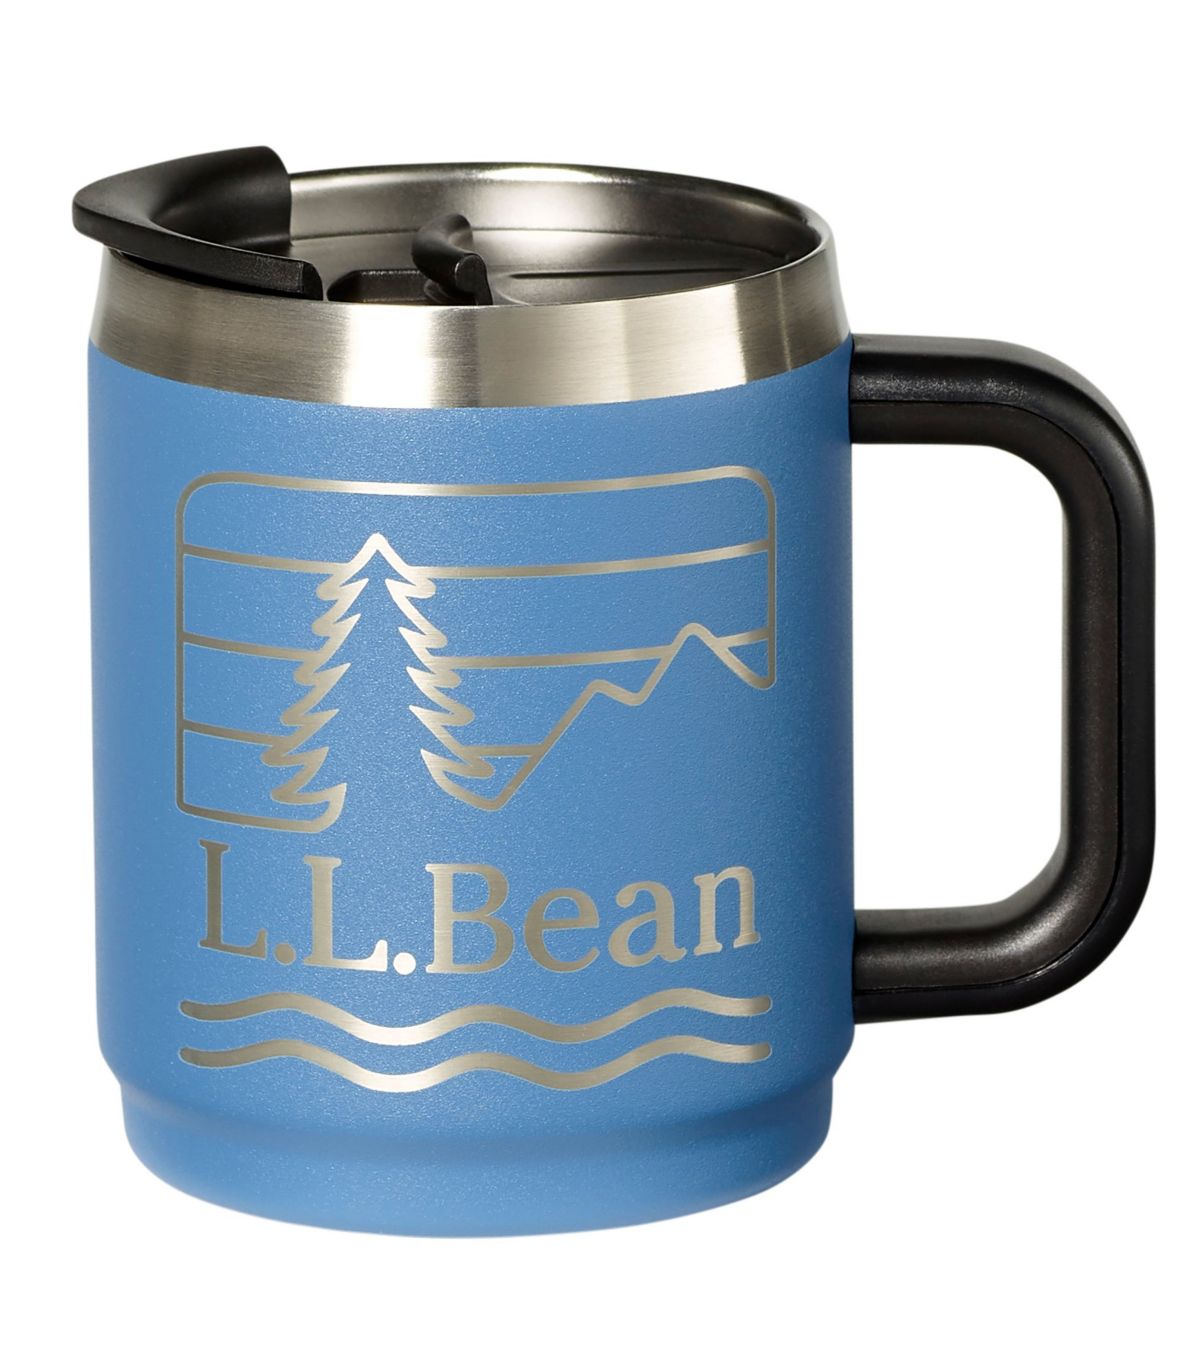 L.L.Bean Double-Wall Camp Mug, 14 oz.